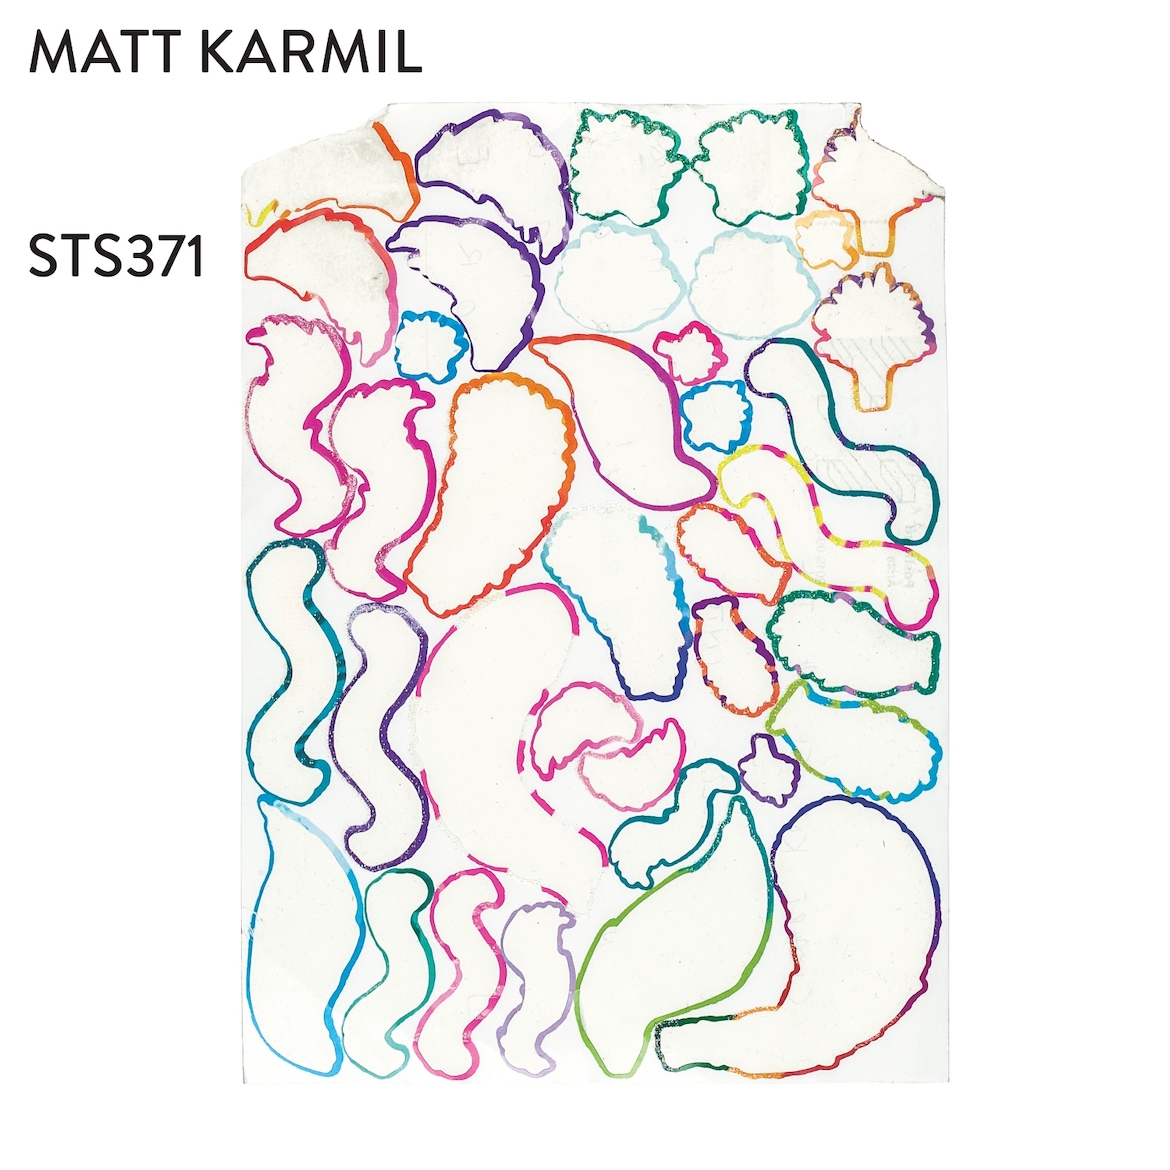 Matt Karmil on Selective Memory